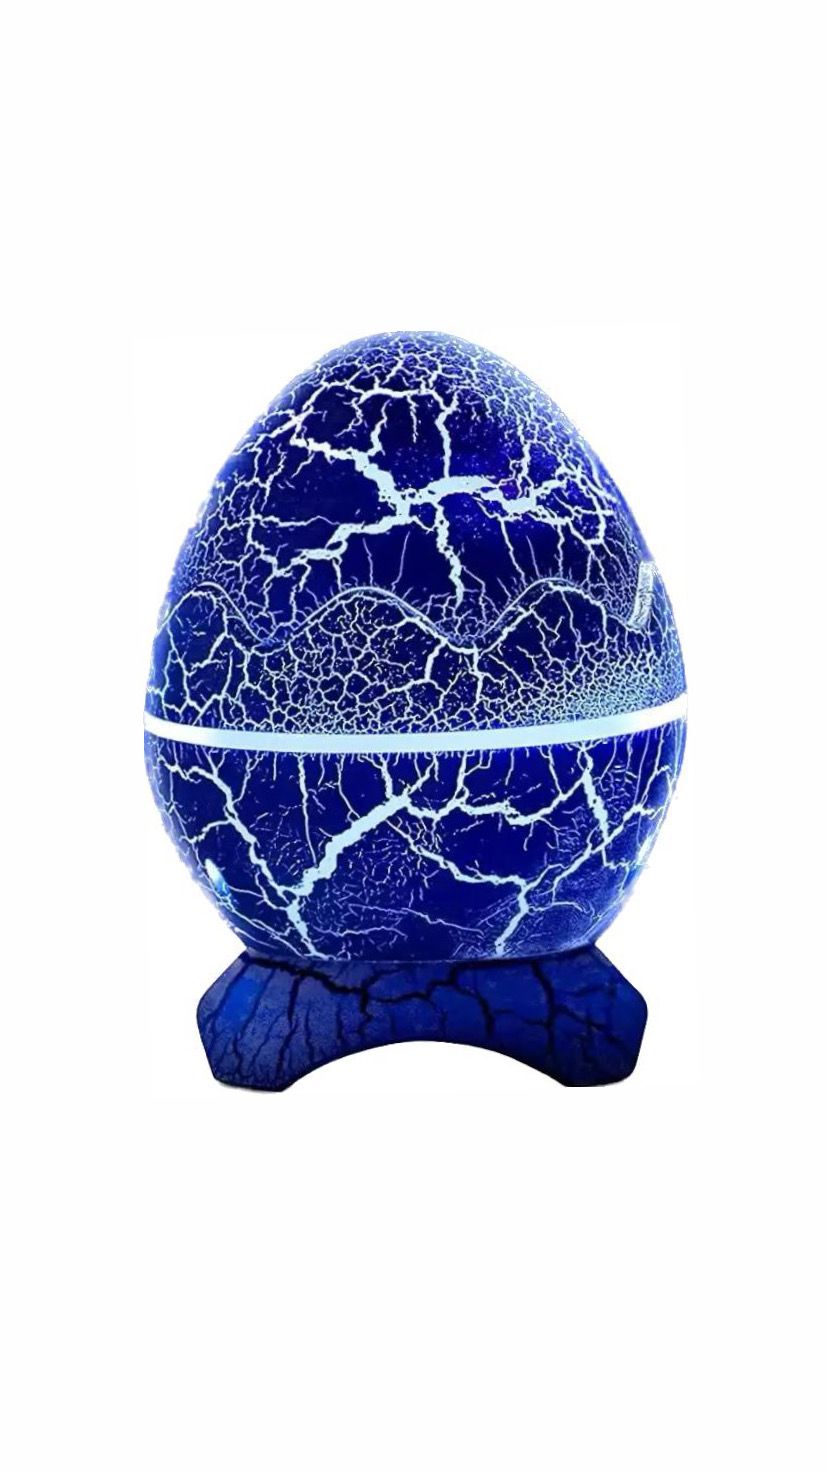 Ночник-проектор яйцо дракона с bluetooth синий 3кн supernowa ночник проектор звездного неба forall star belly 238991676409123q синий